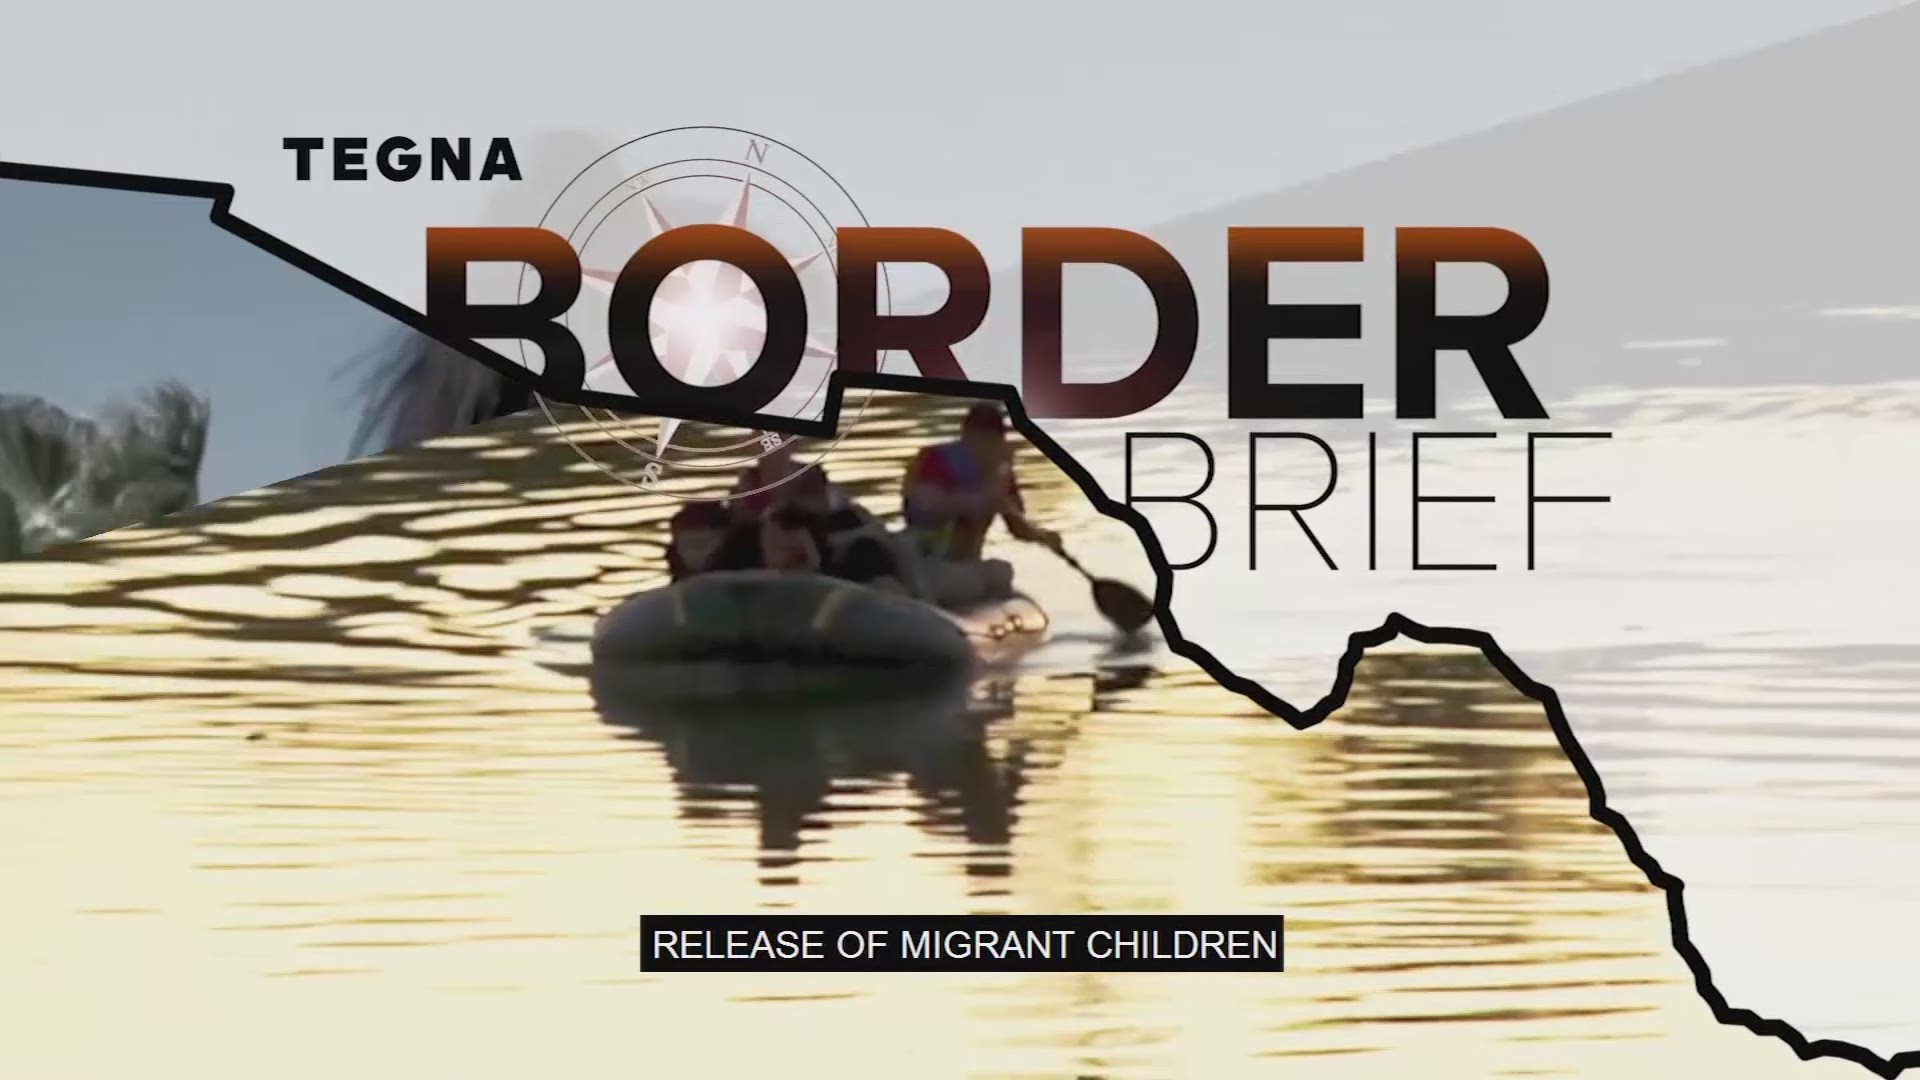 Officials move to close border detention center for unaccompanied minors in Tornillo, Texas.